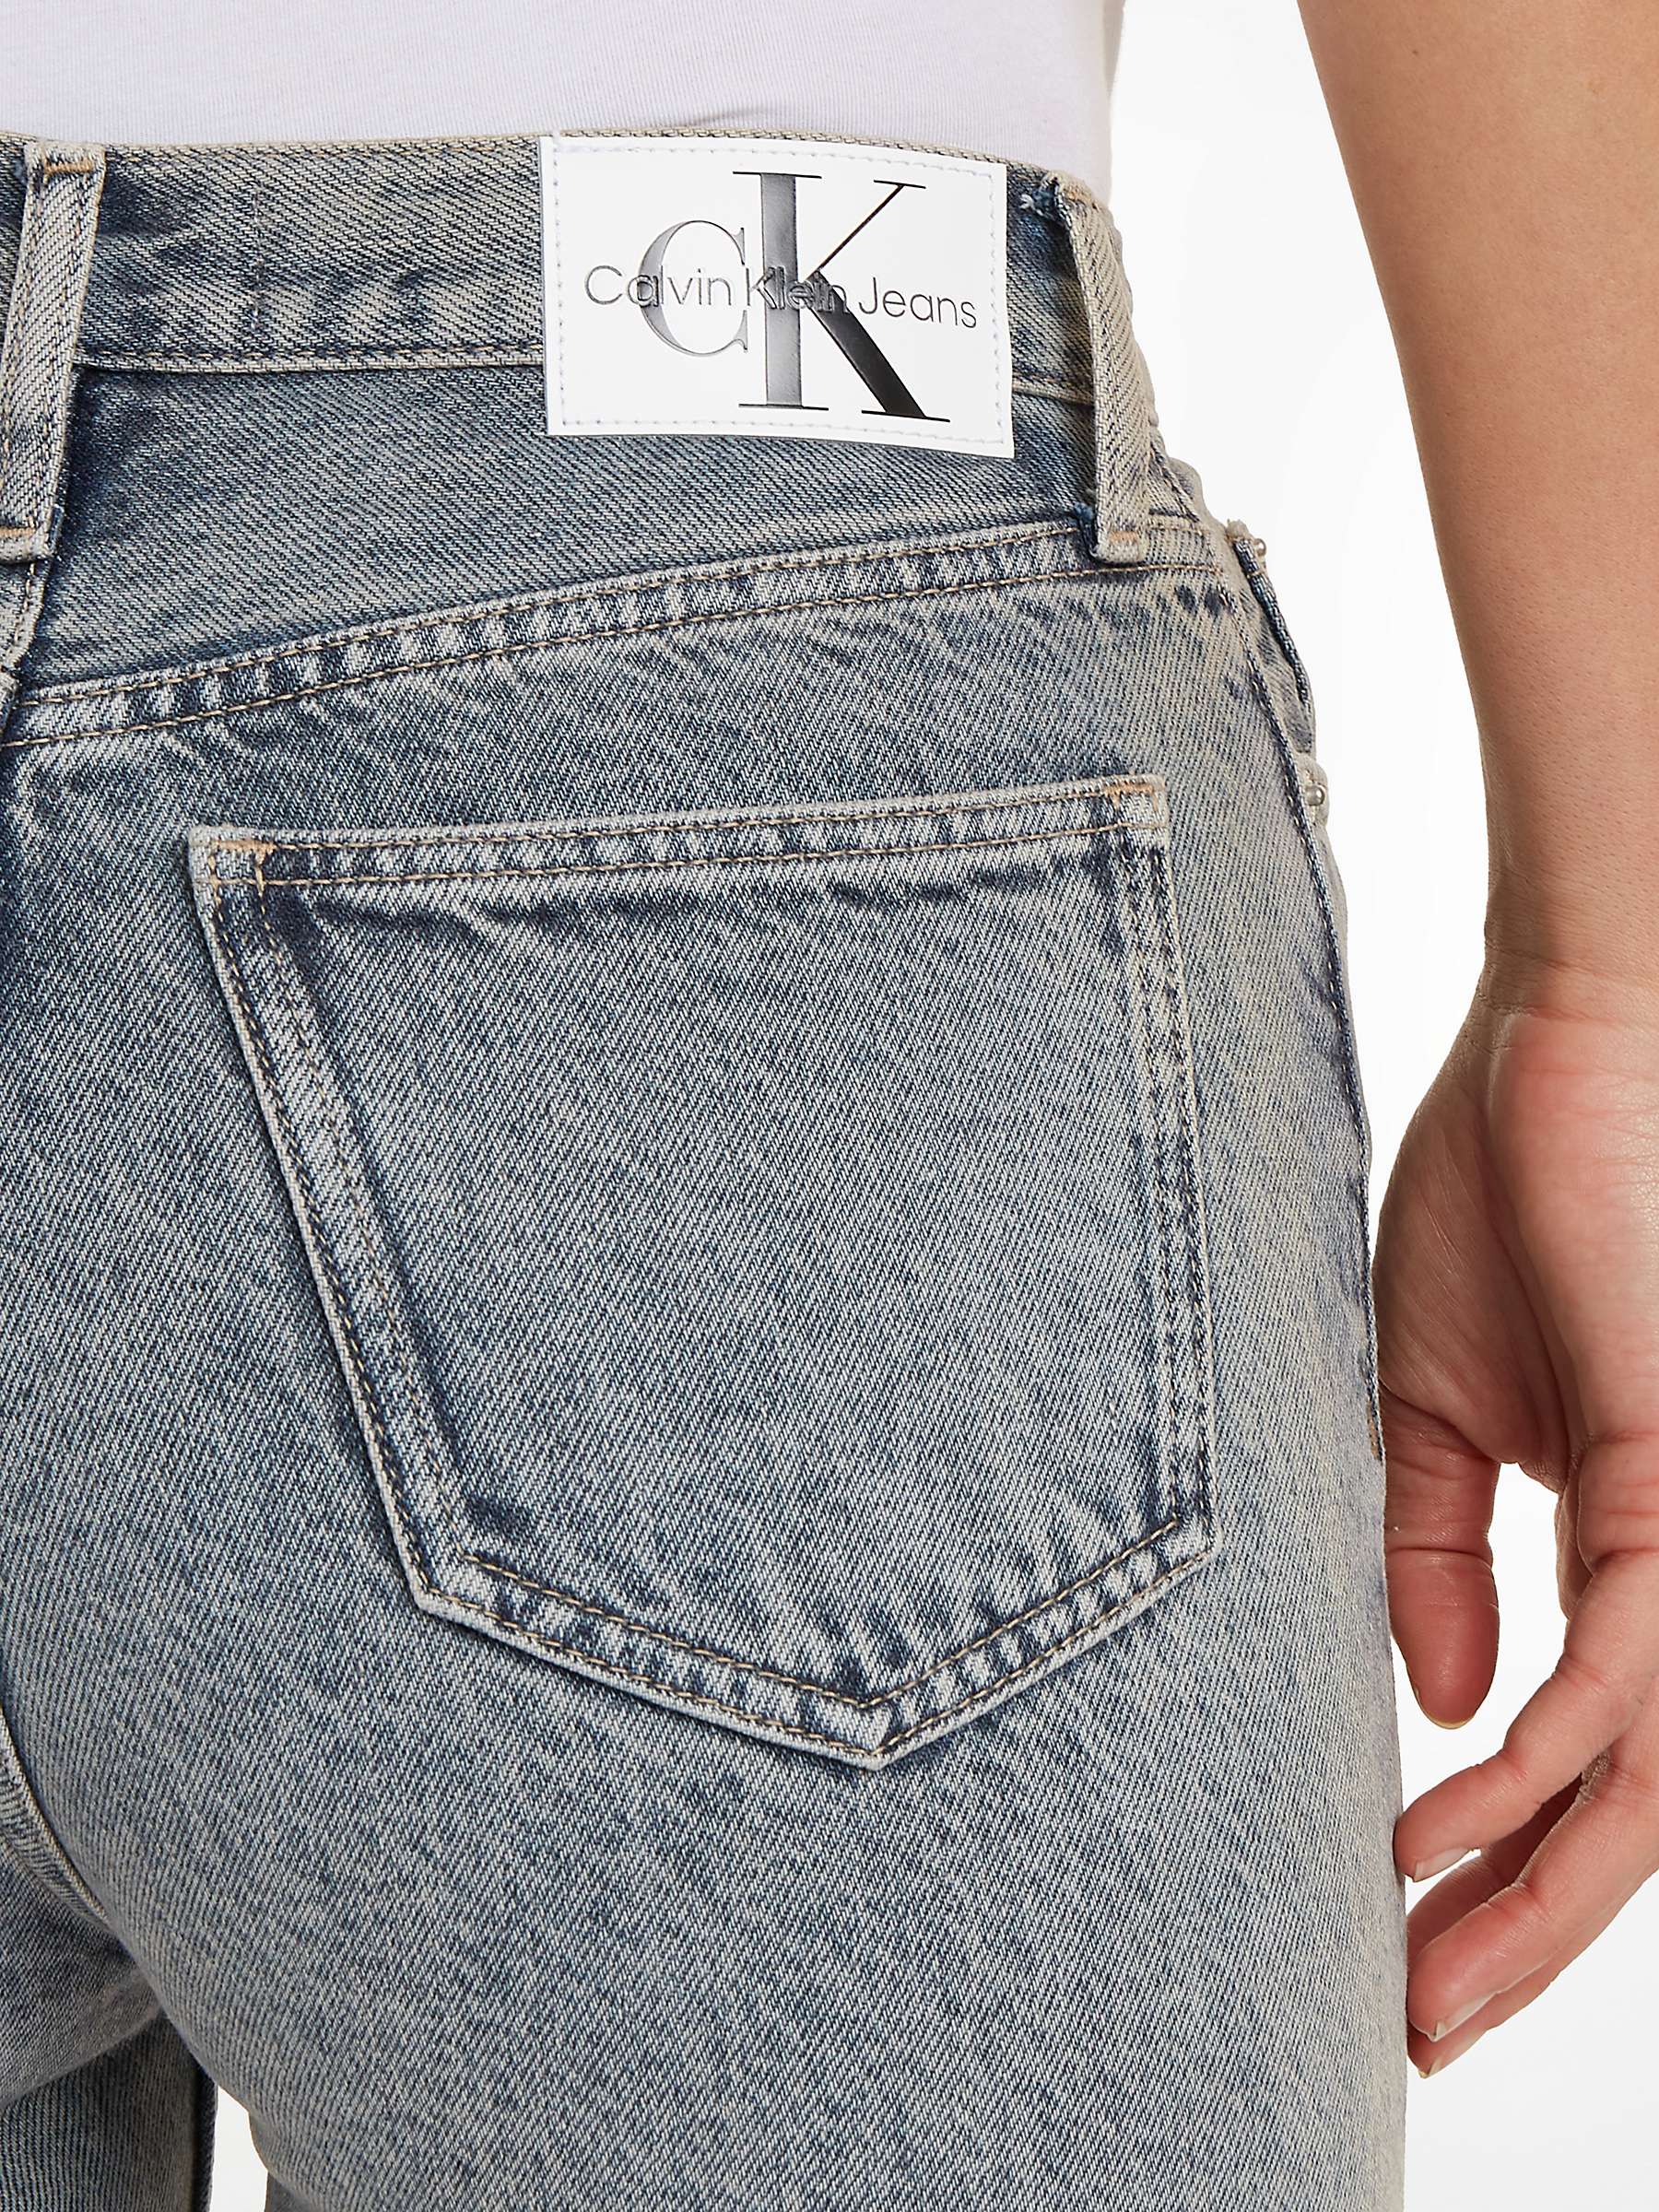 Calvin Klein High Rise Straight Cut Jeans, Grey at John Lewis & Partners